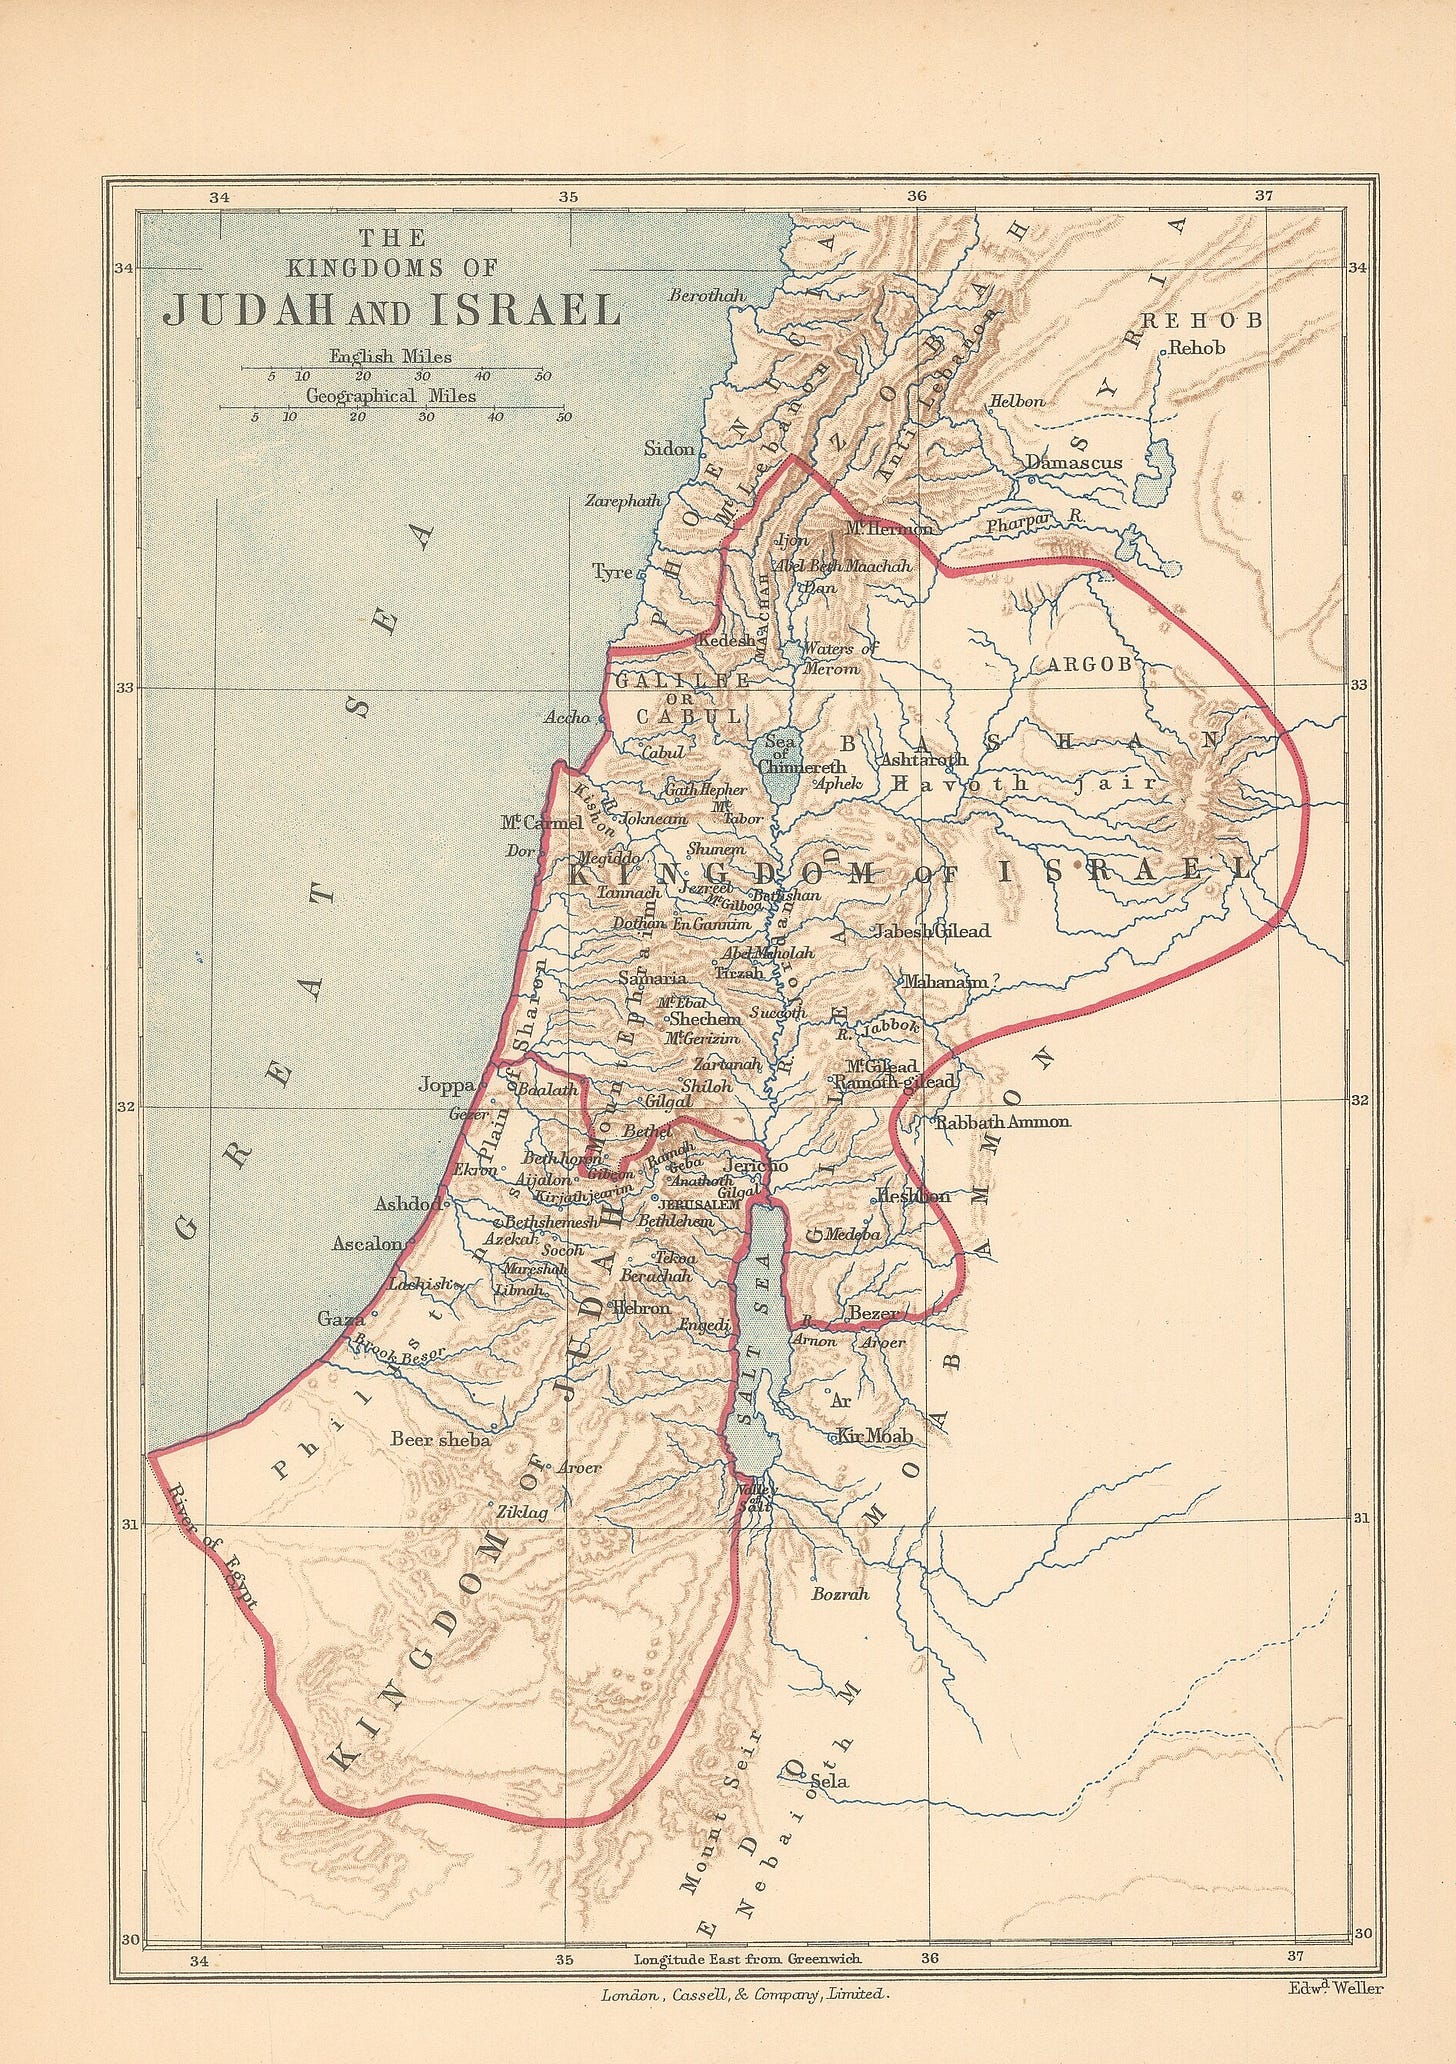 The Kingdoms of Judah and Israel